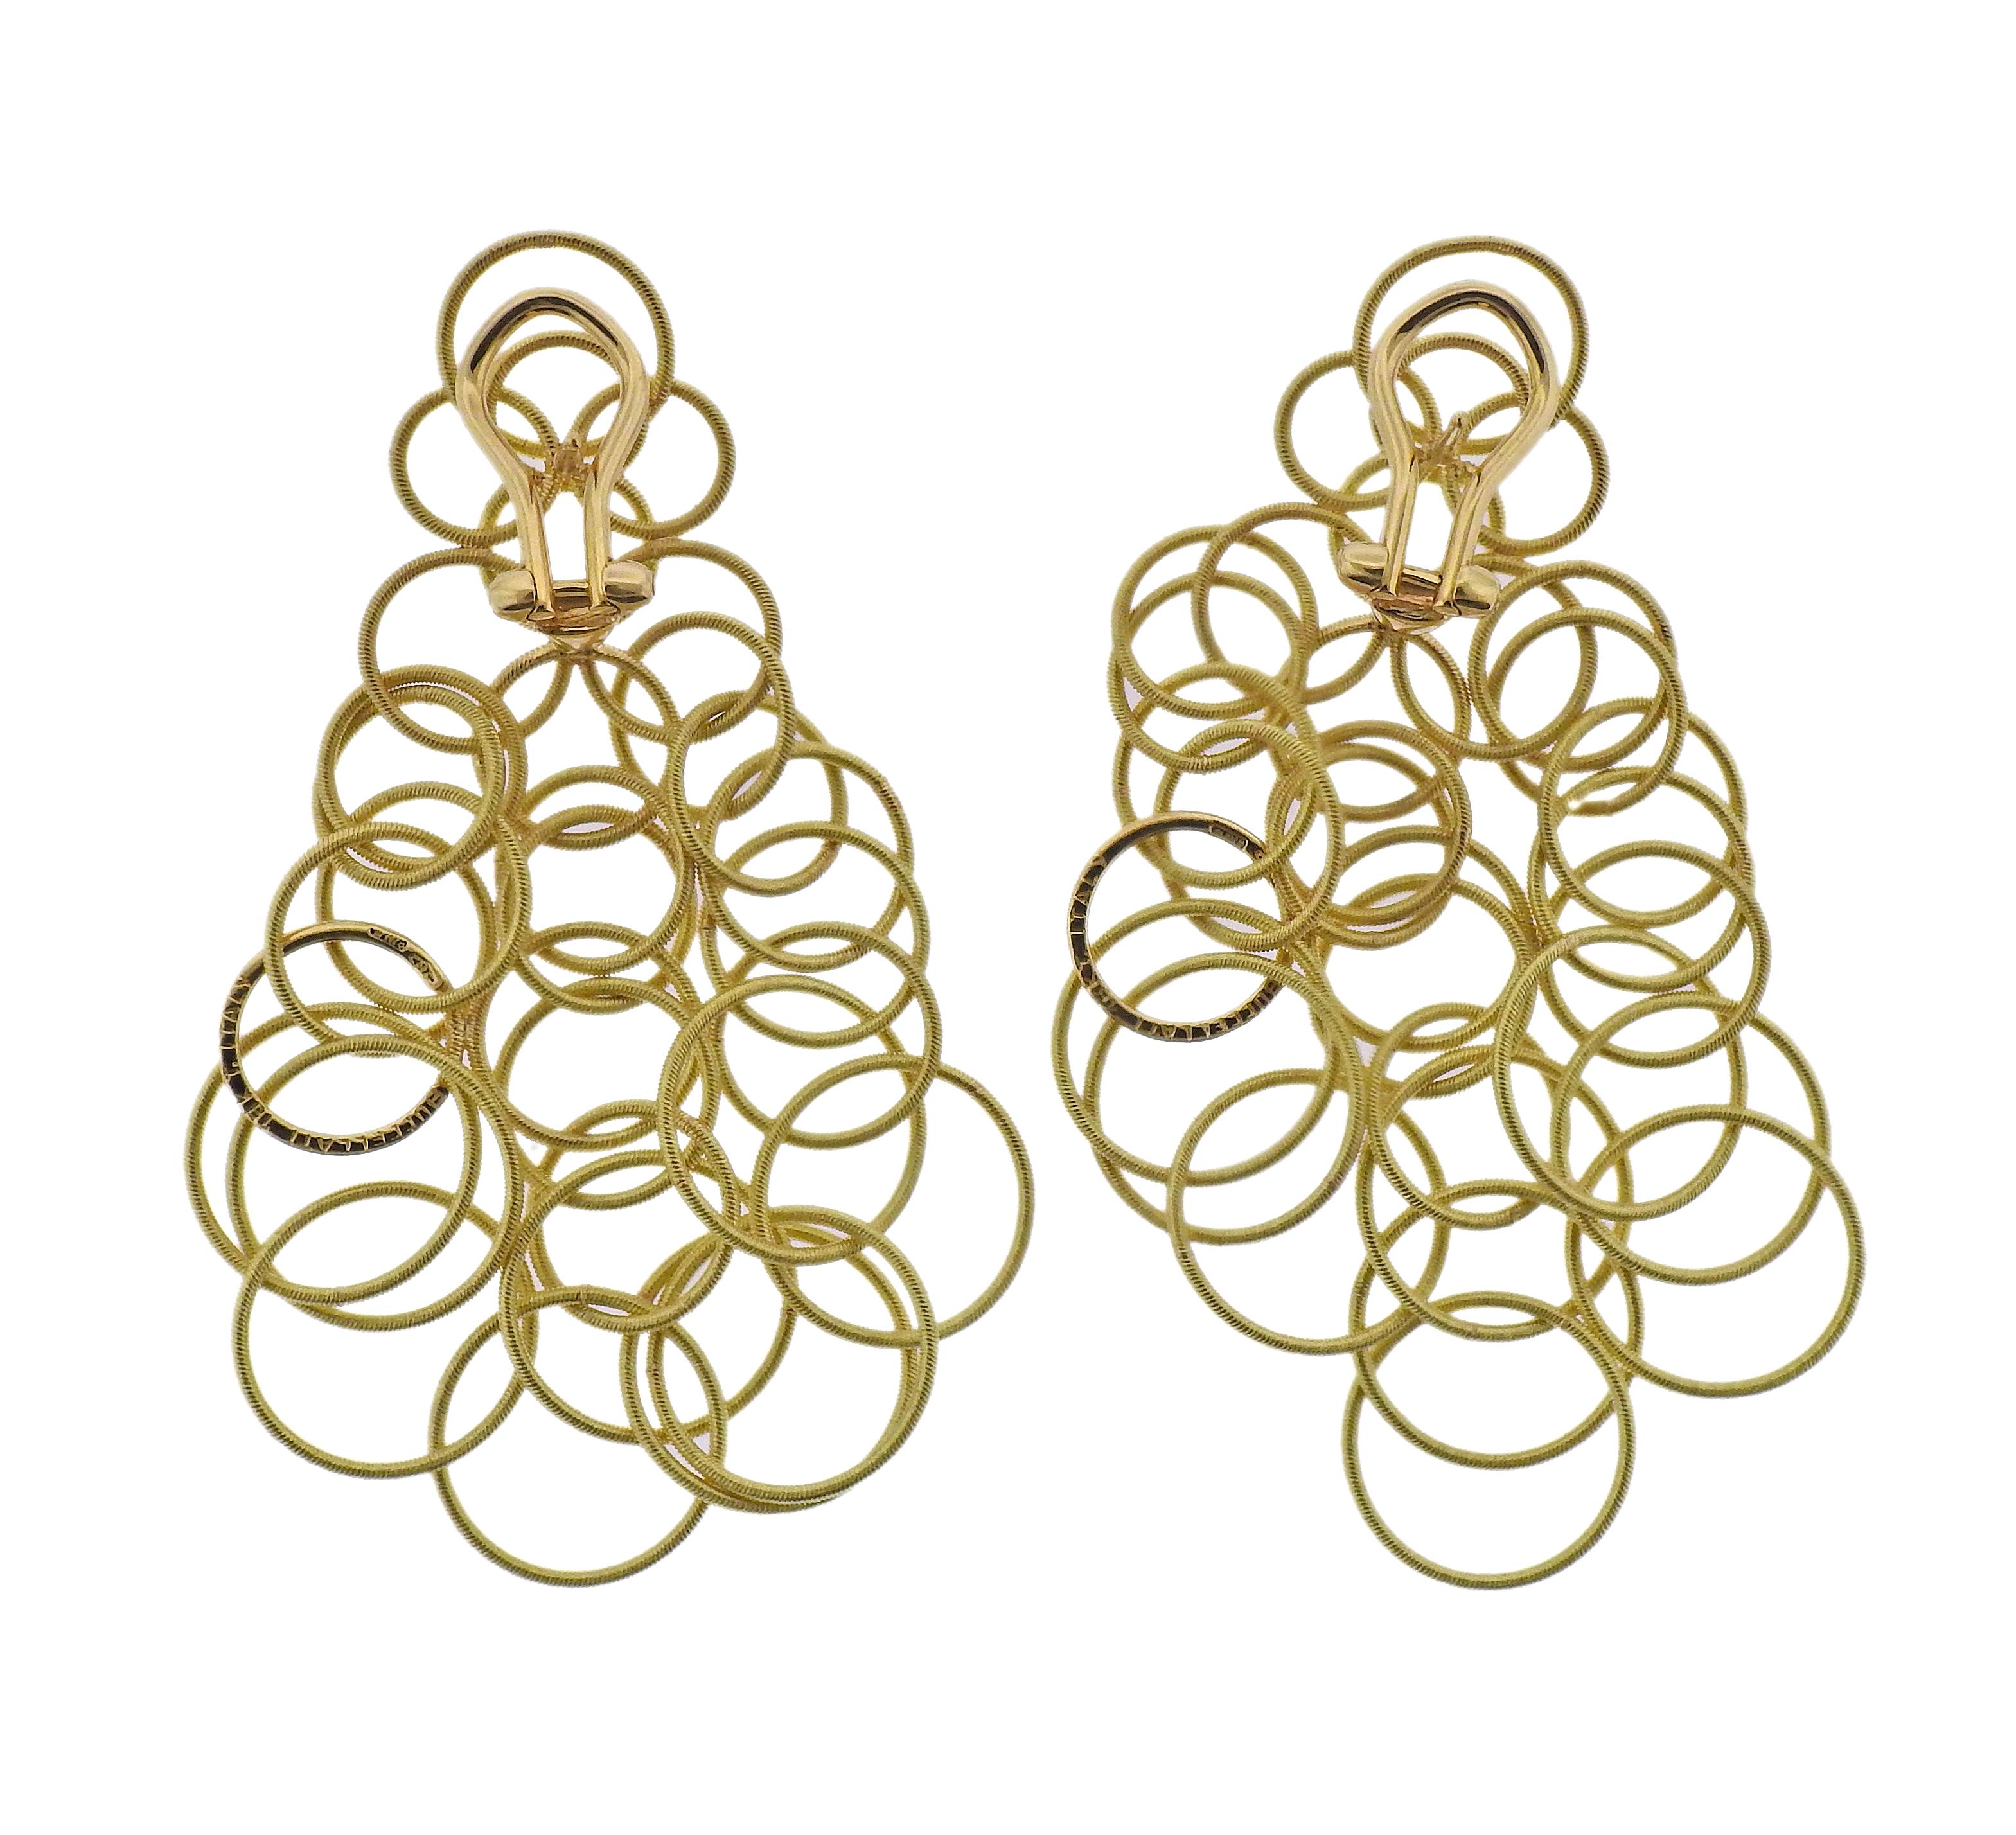 Pair of 18k yellow gold Hawaii earrings by Buccellati. Earrings are 2 5/8